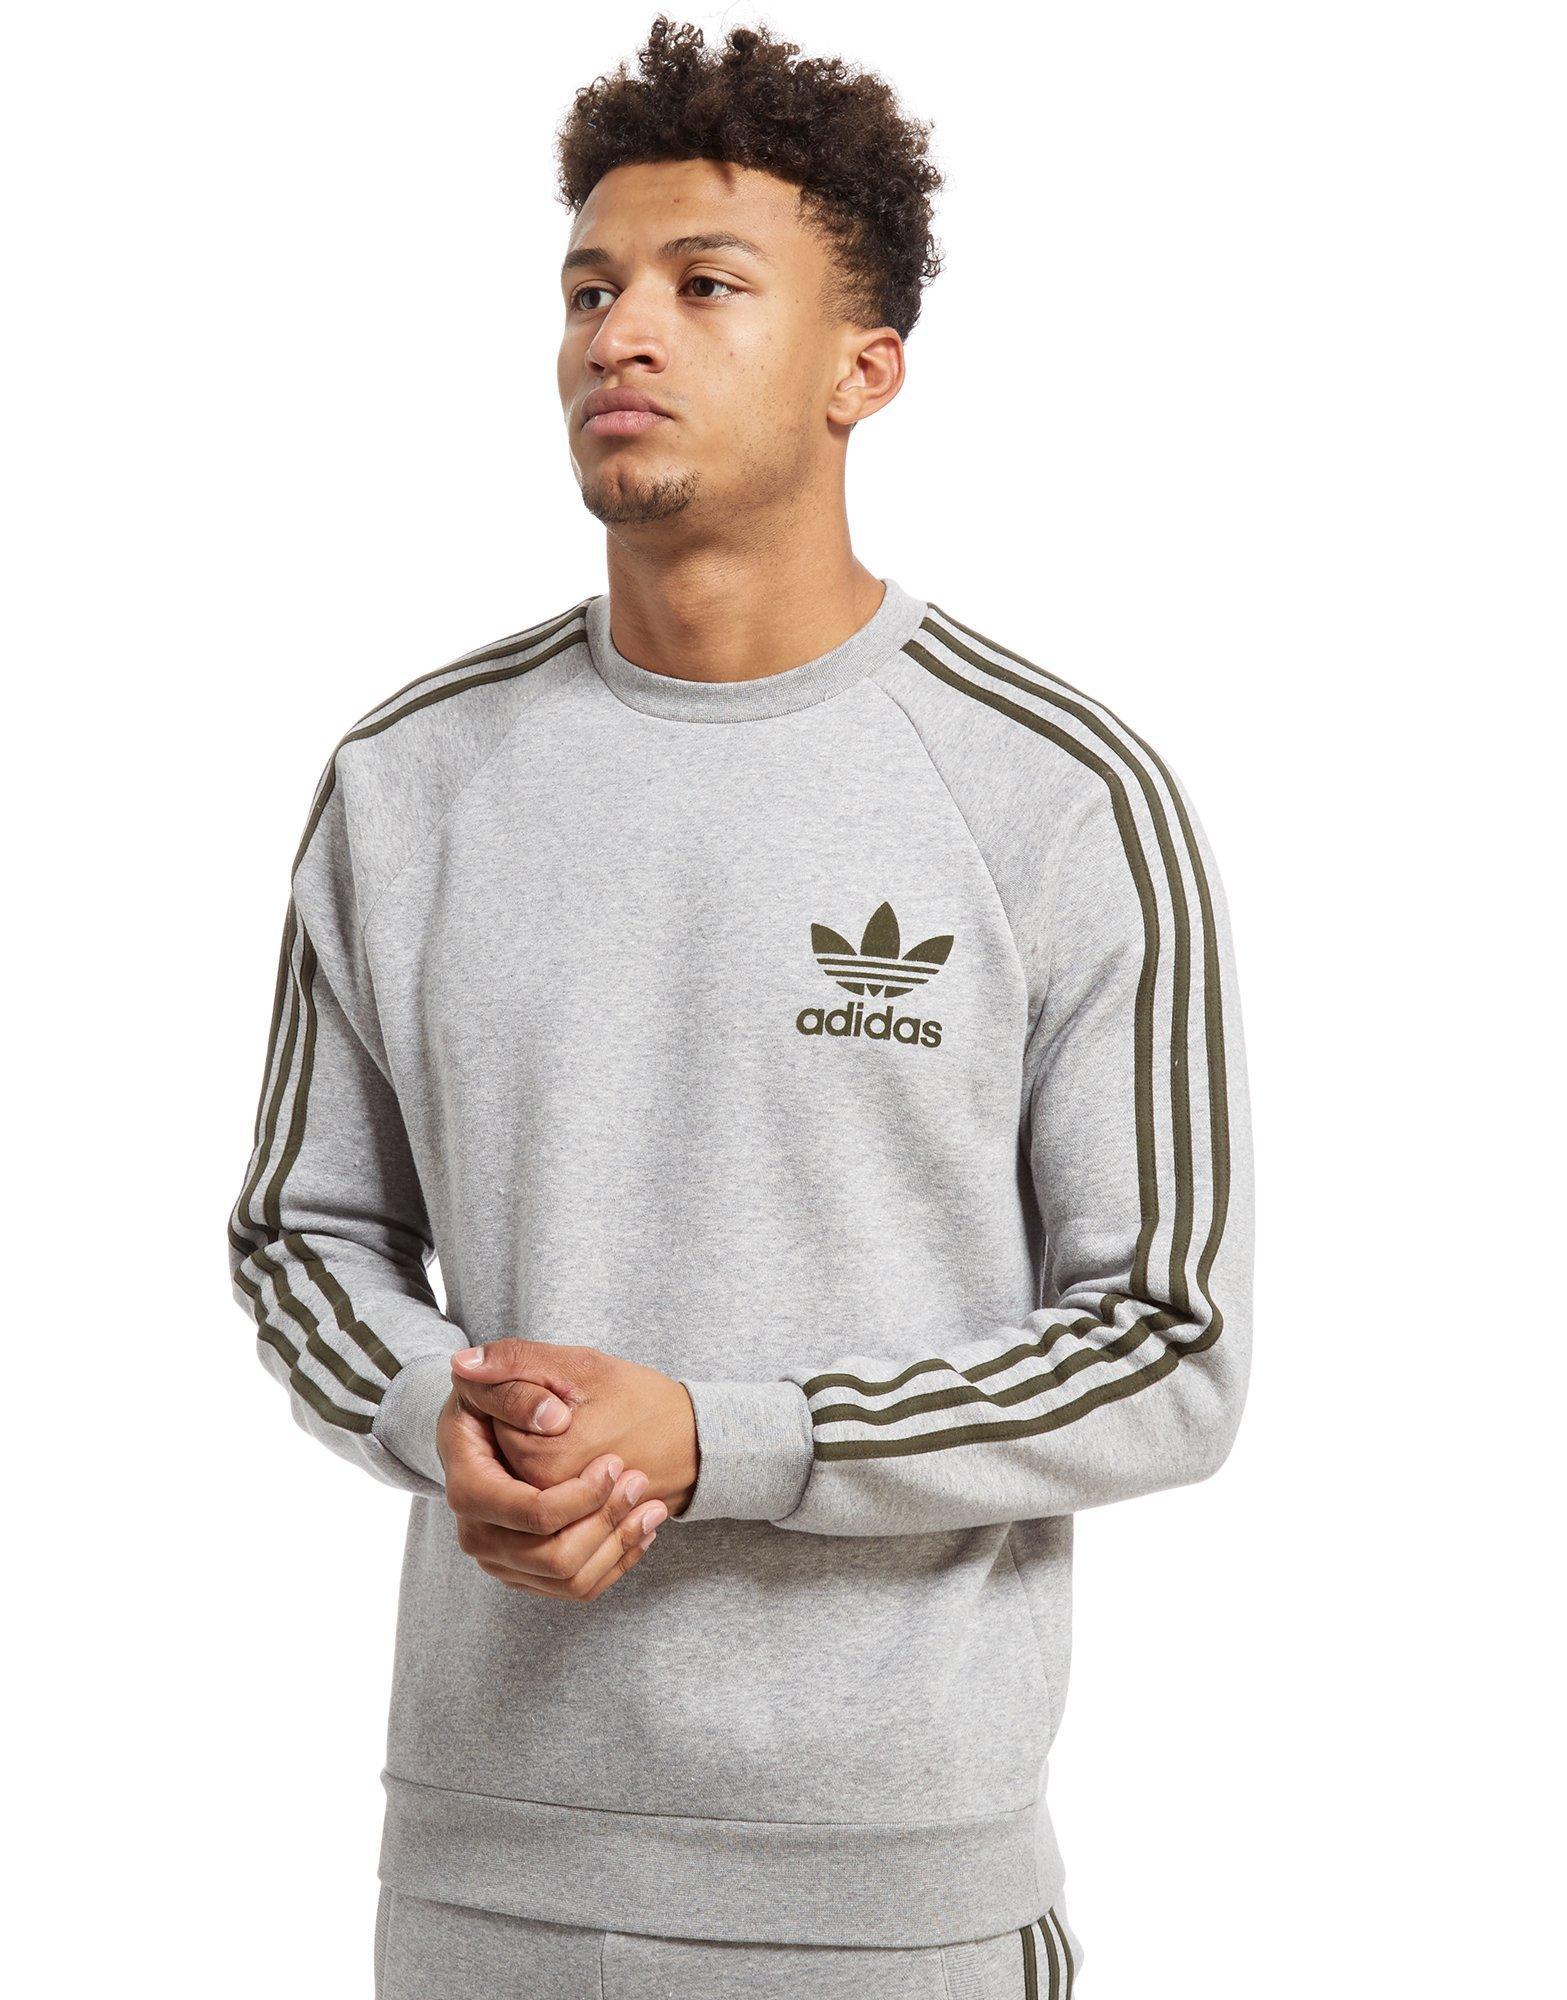 Lyst - Adidas Originals California Crew Sweatshirt in Gray for Men